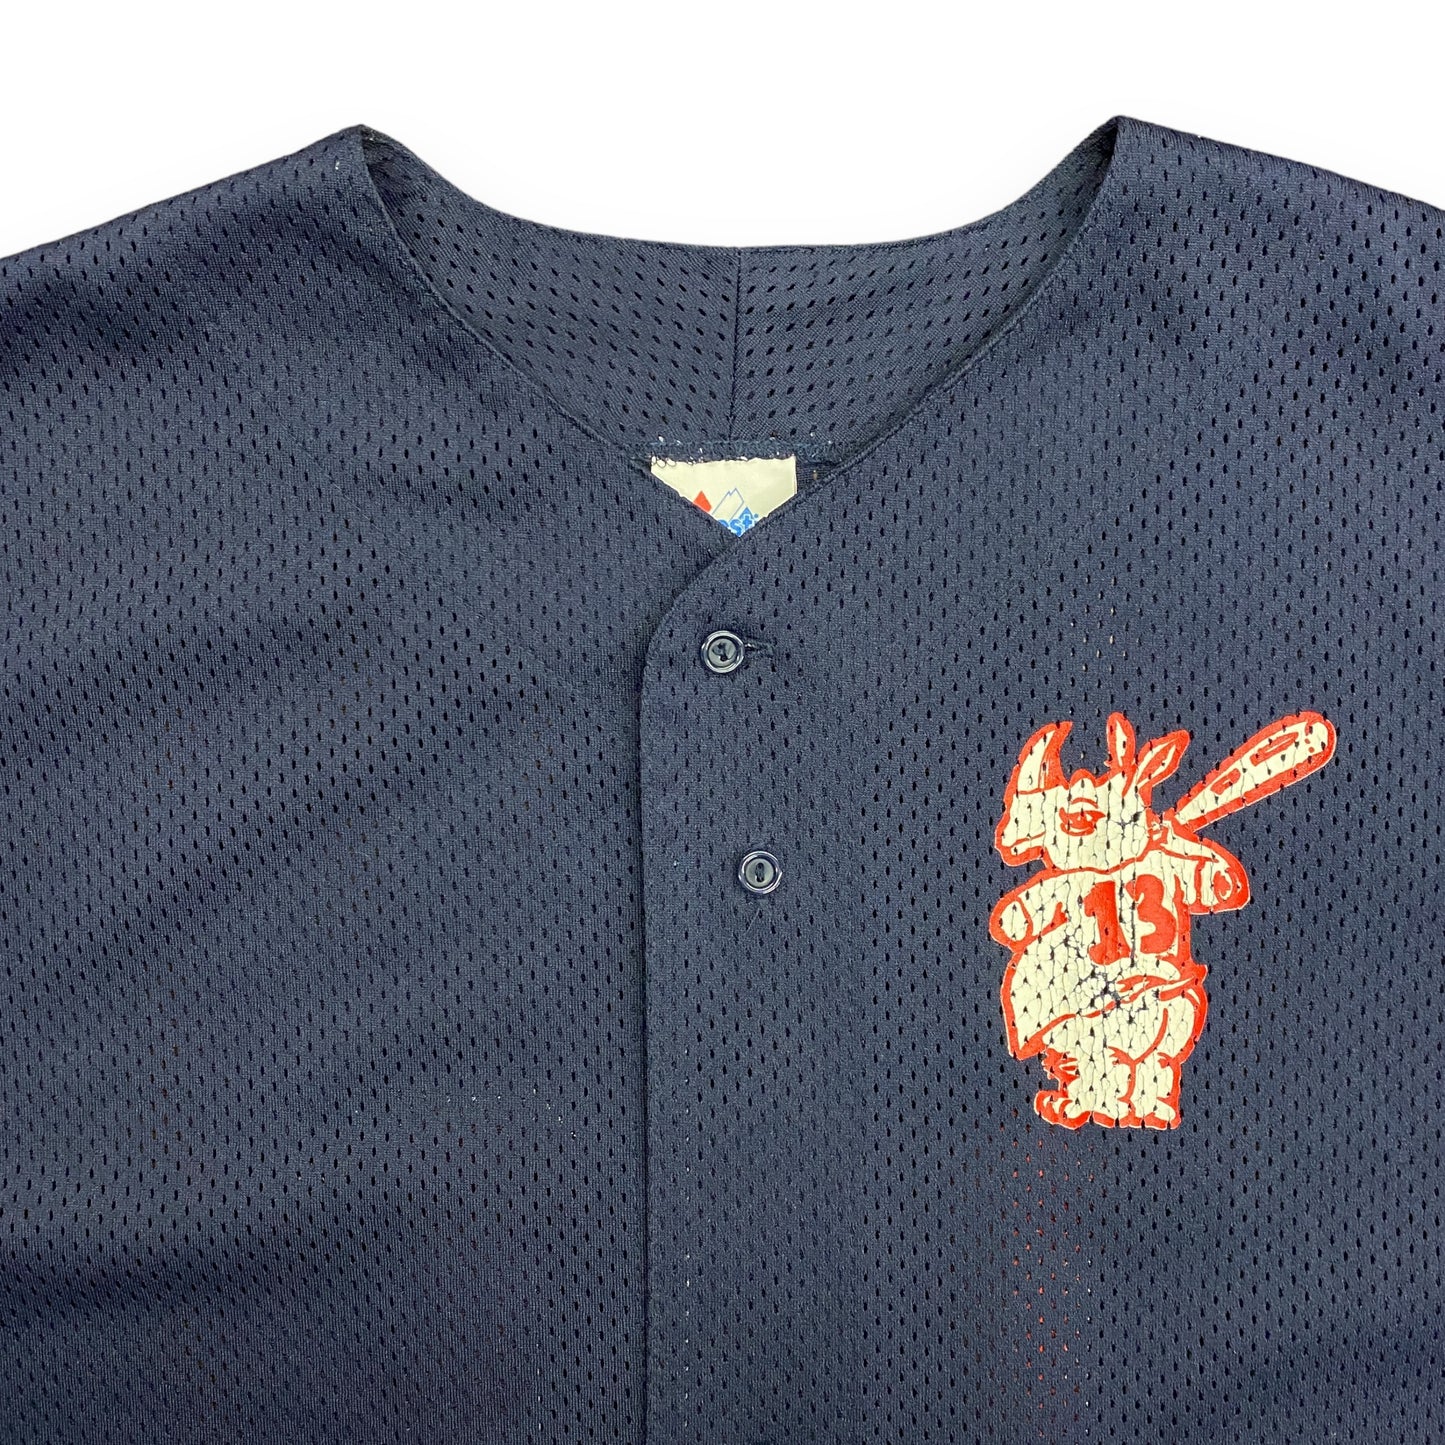 Vintage Majestic Mesh Knit Baseball Jersey - Size XL